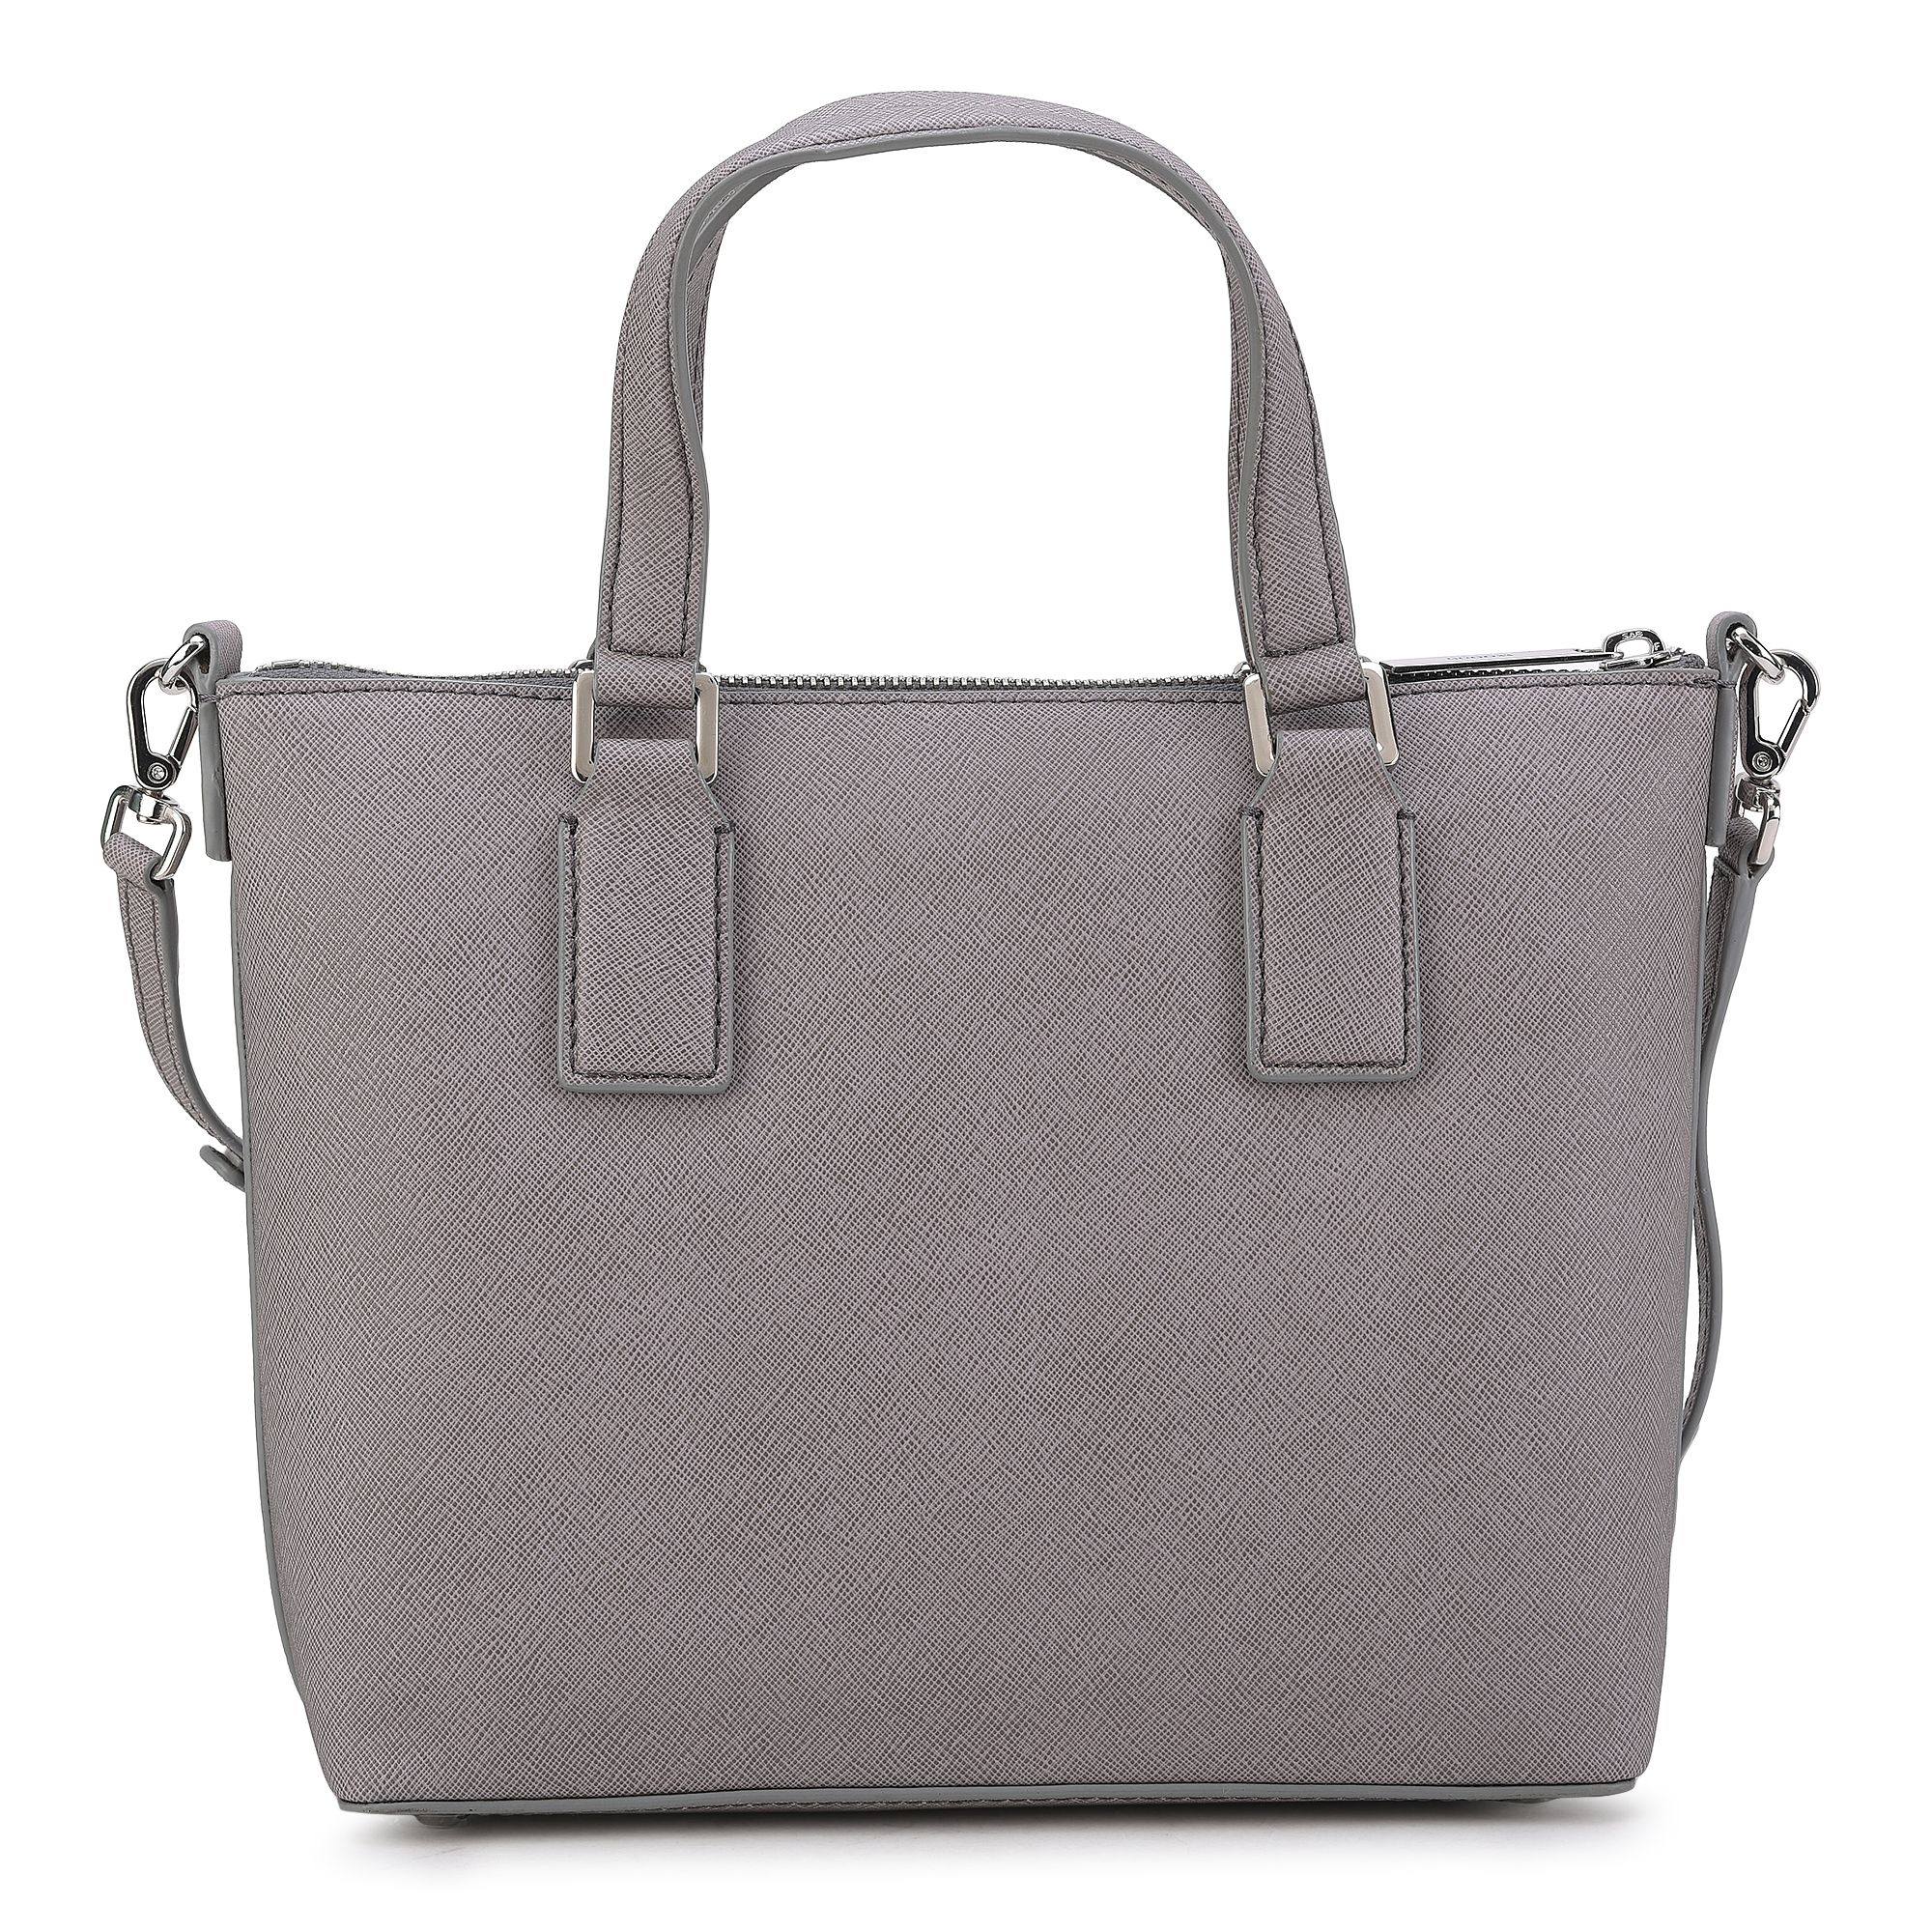 Grey handbag for women